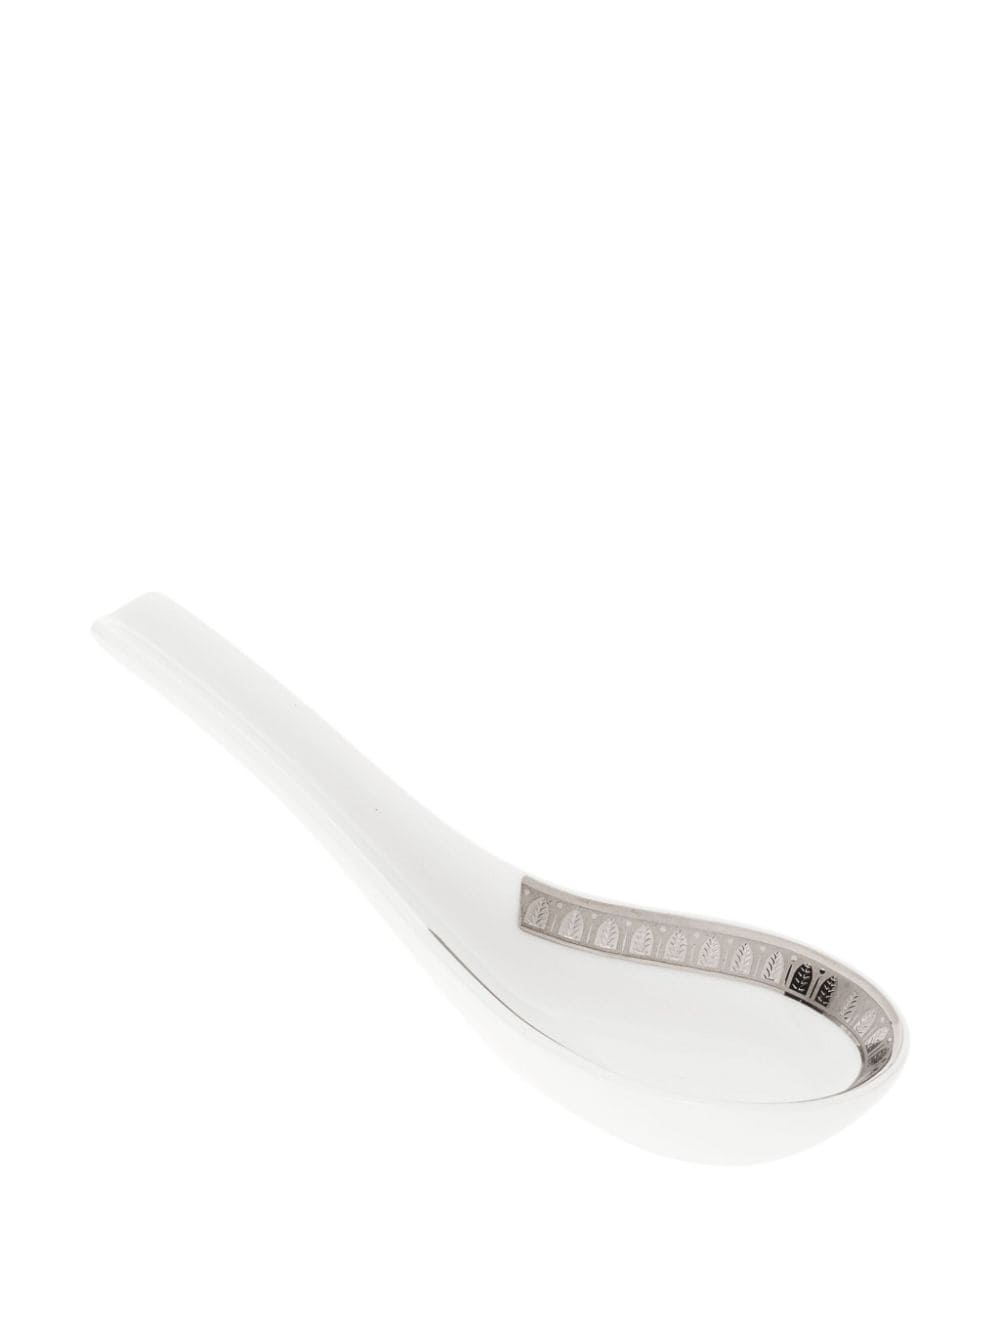 Image 1 of Christofle Malmaison porcelain Chinese spoon